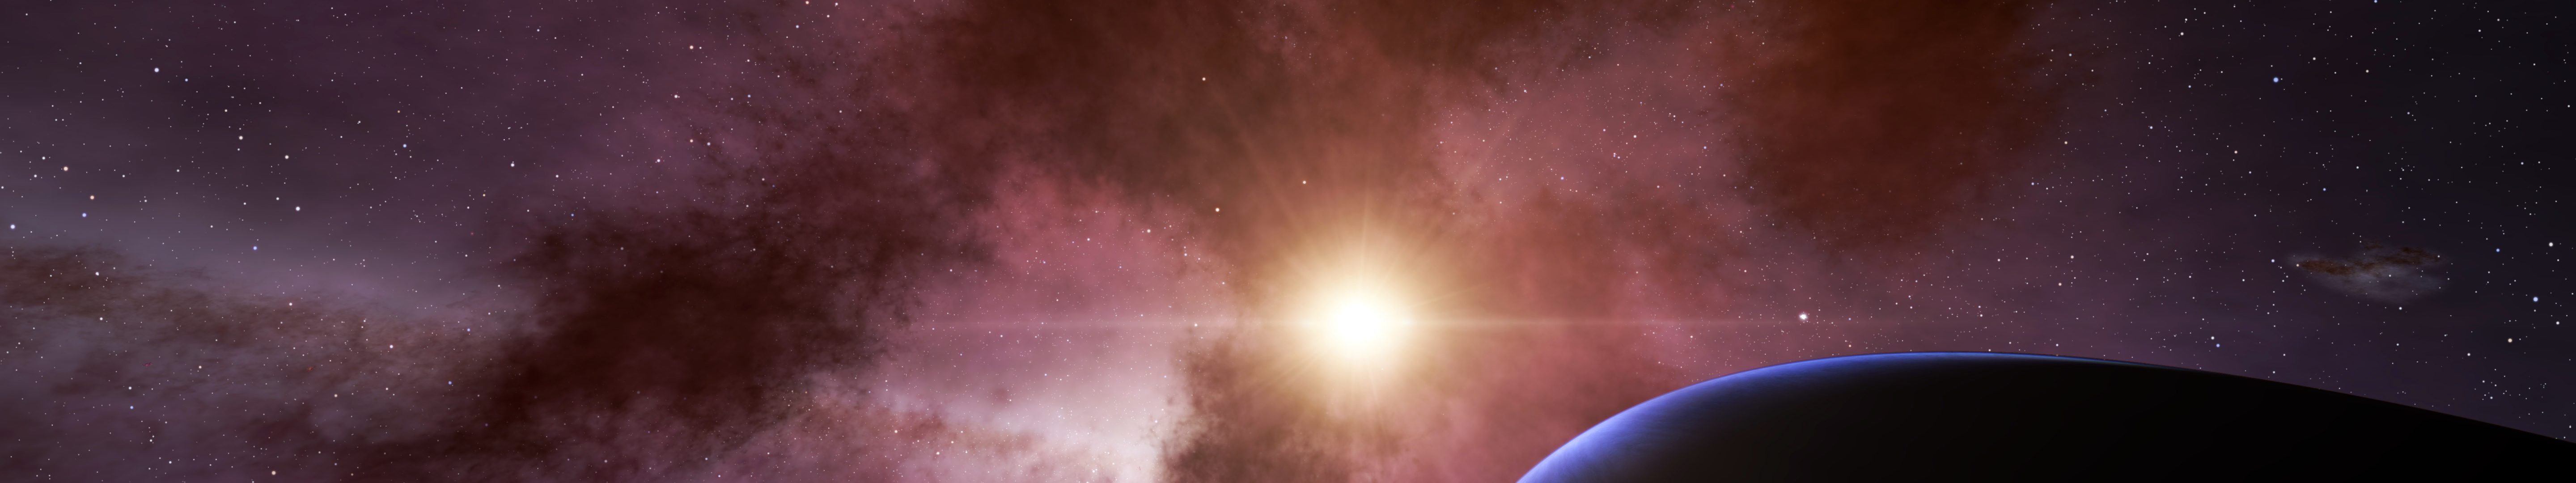 Space Engine Planet Nebula Space Art Digital Art CGi 3D Render 5760x1080